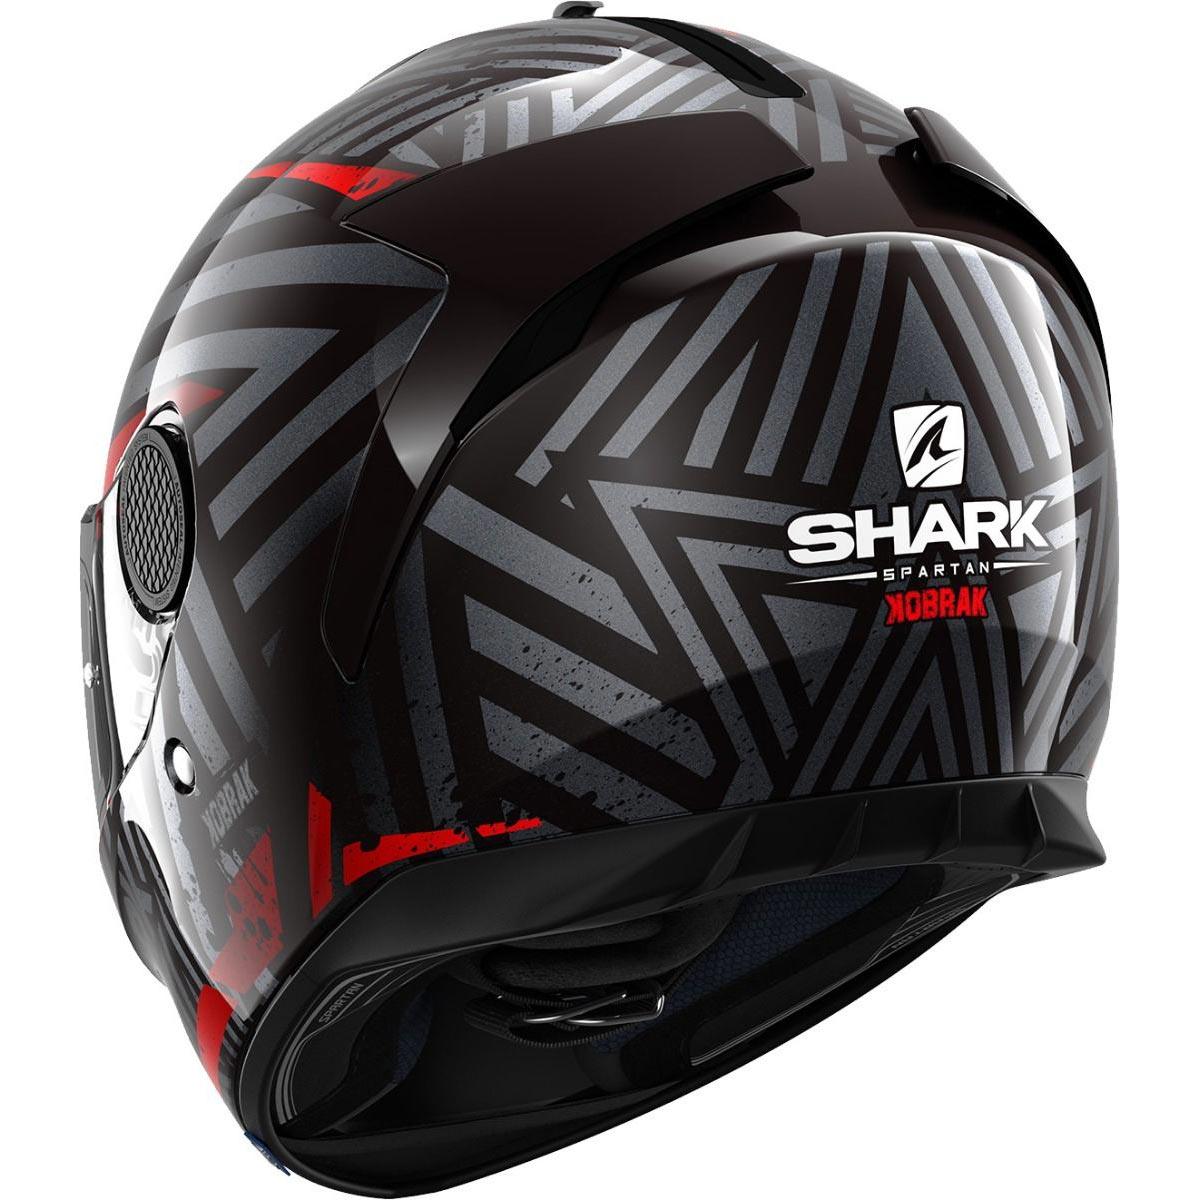 Shark Spartan Kobrak Helmet KRR - Black Red - Browse our range of Helmet: Full Face - getgearedshop 